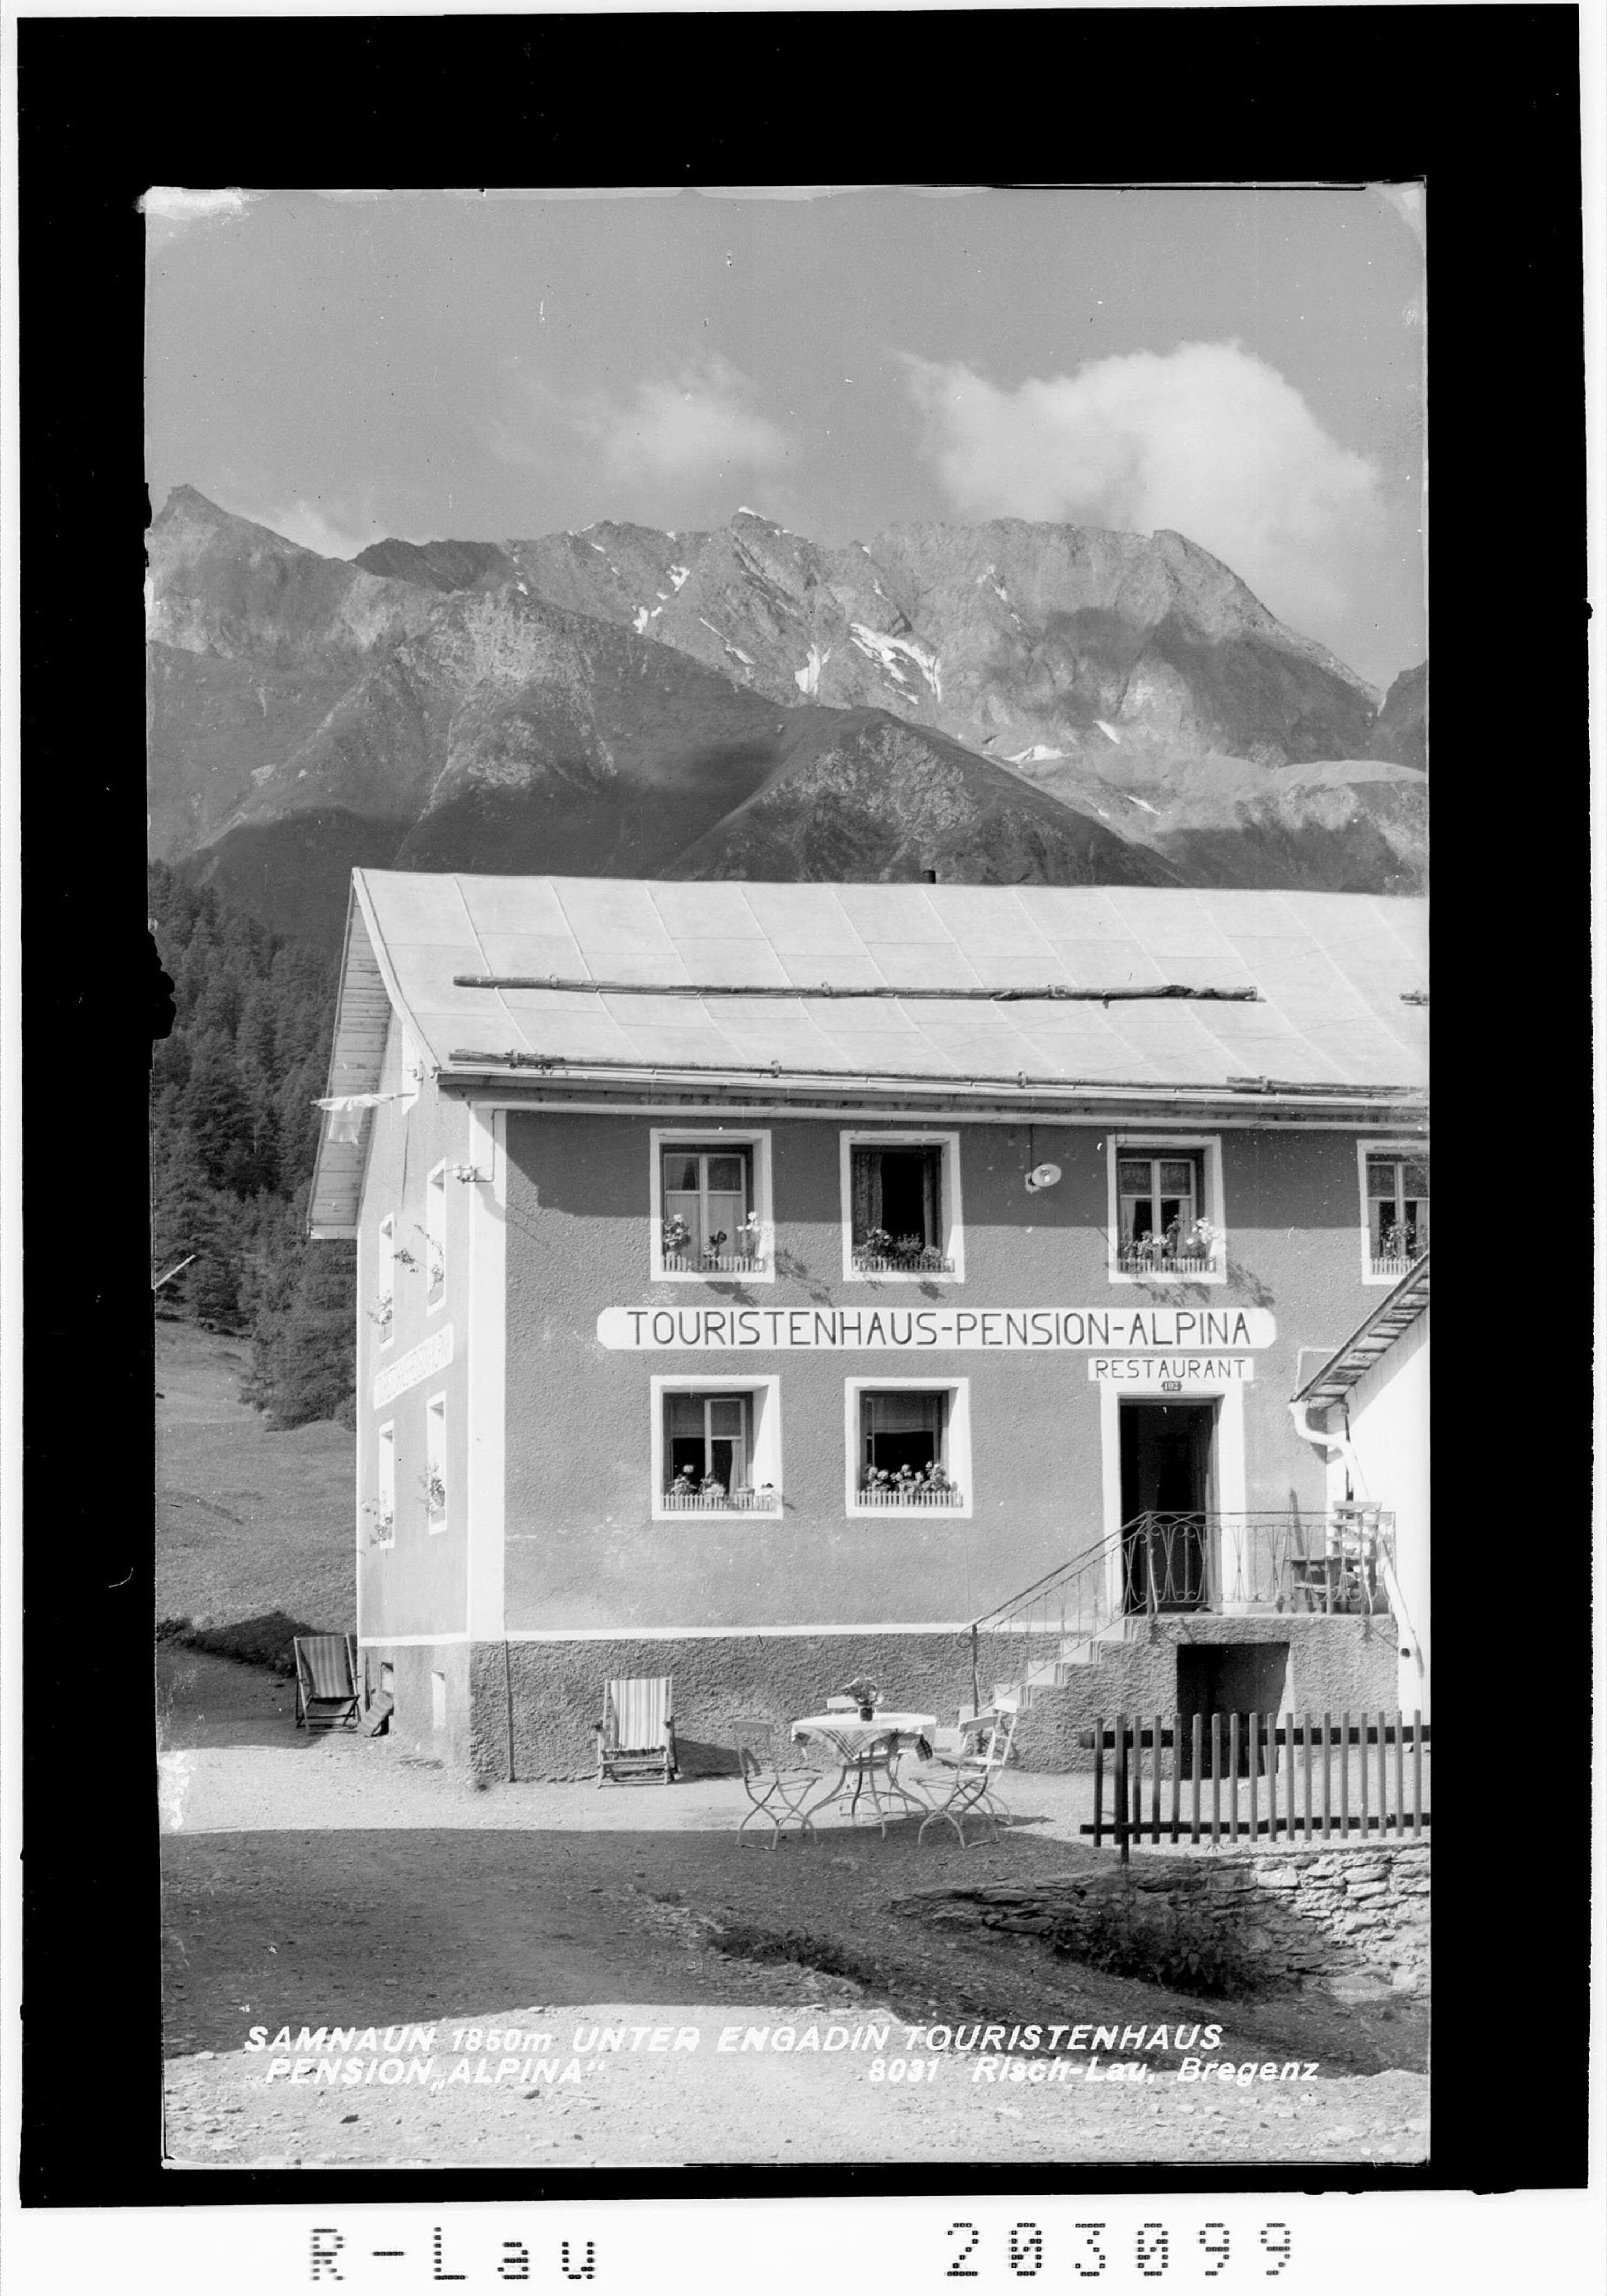 Samnaun 1850 m Unterengadin Touristenhaus - Pension - Alpina></div>


    <hr>
    <div class=